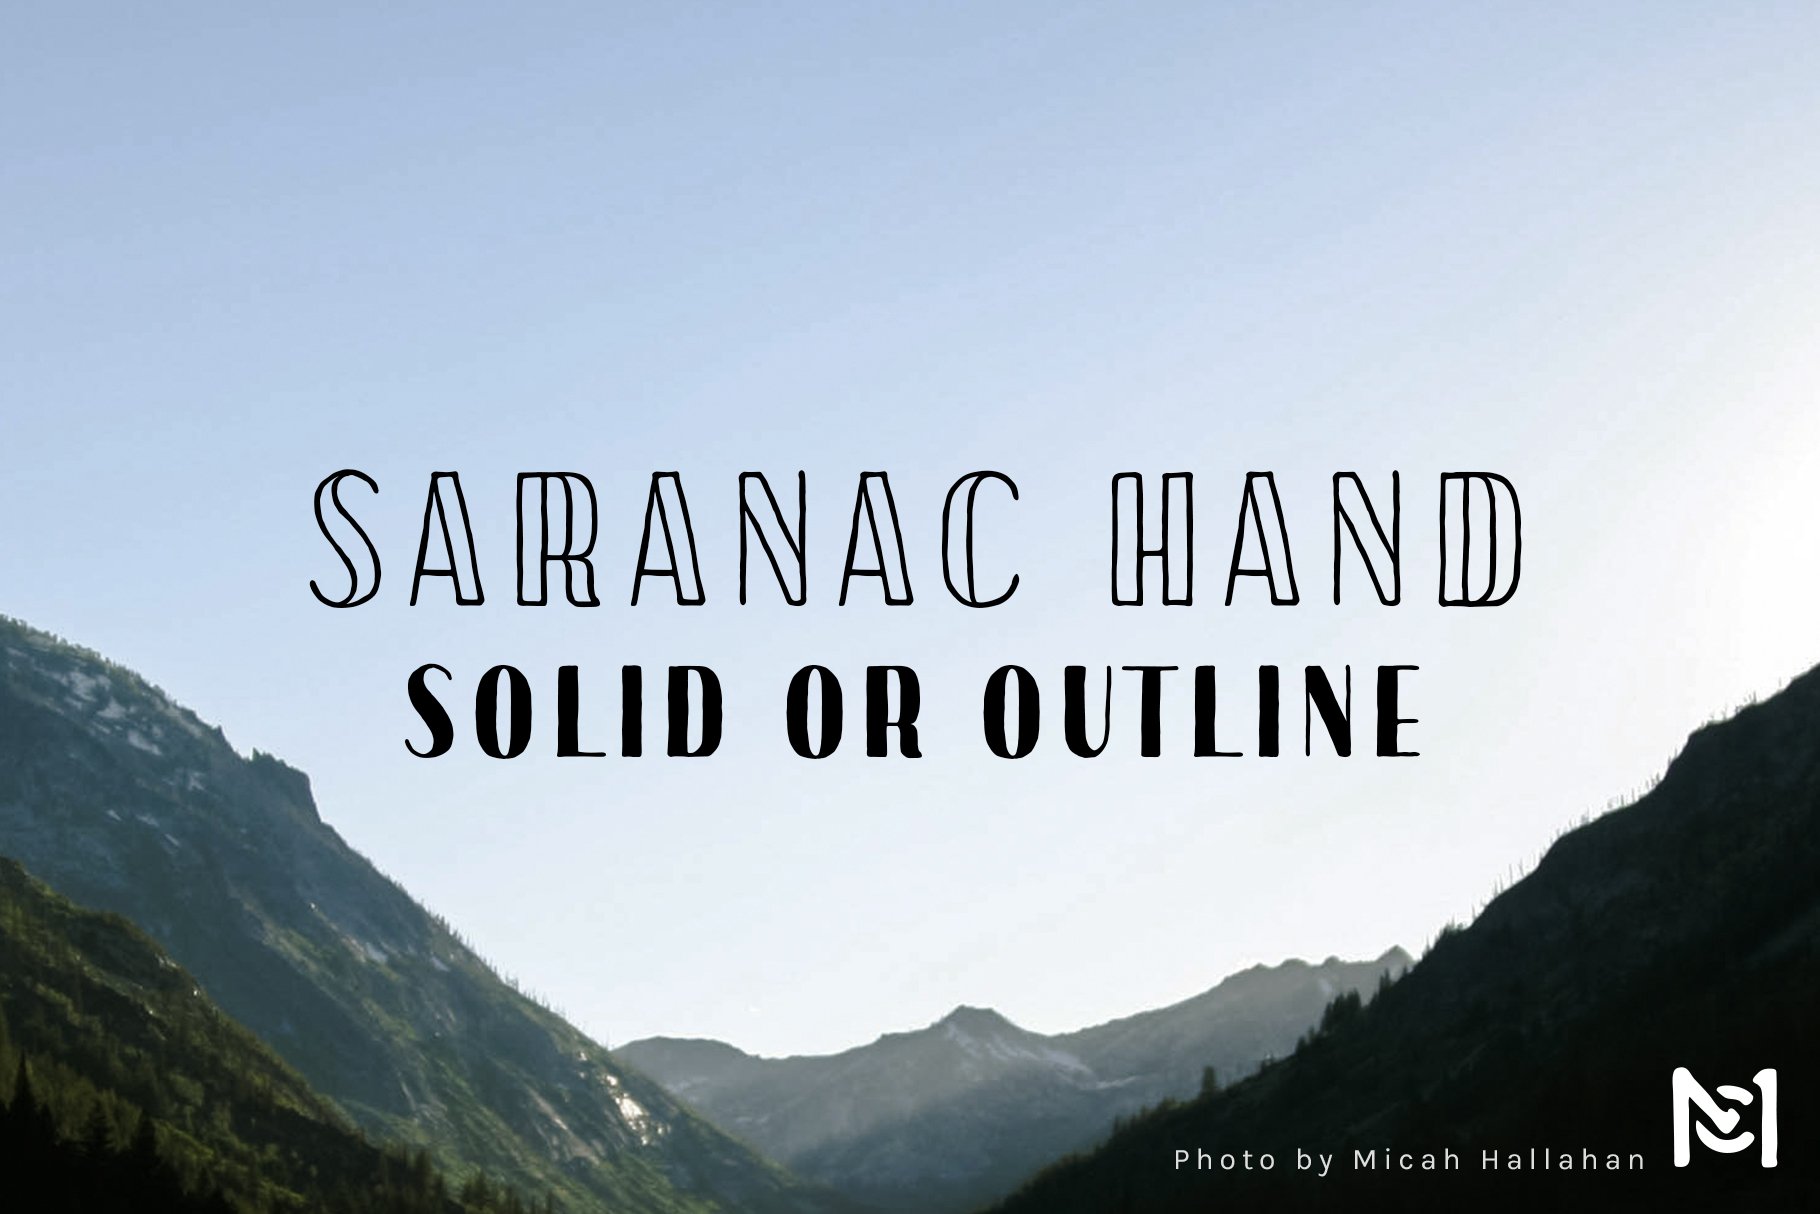 Saranac Hand cover image.